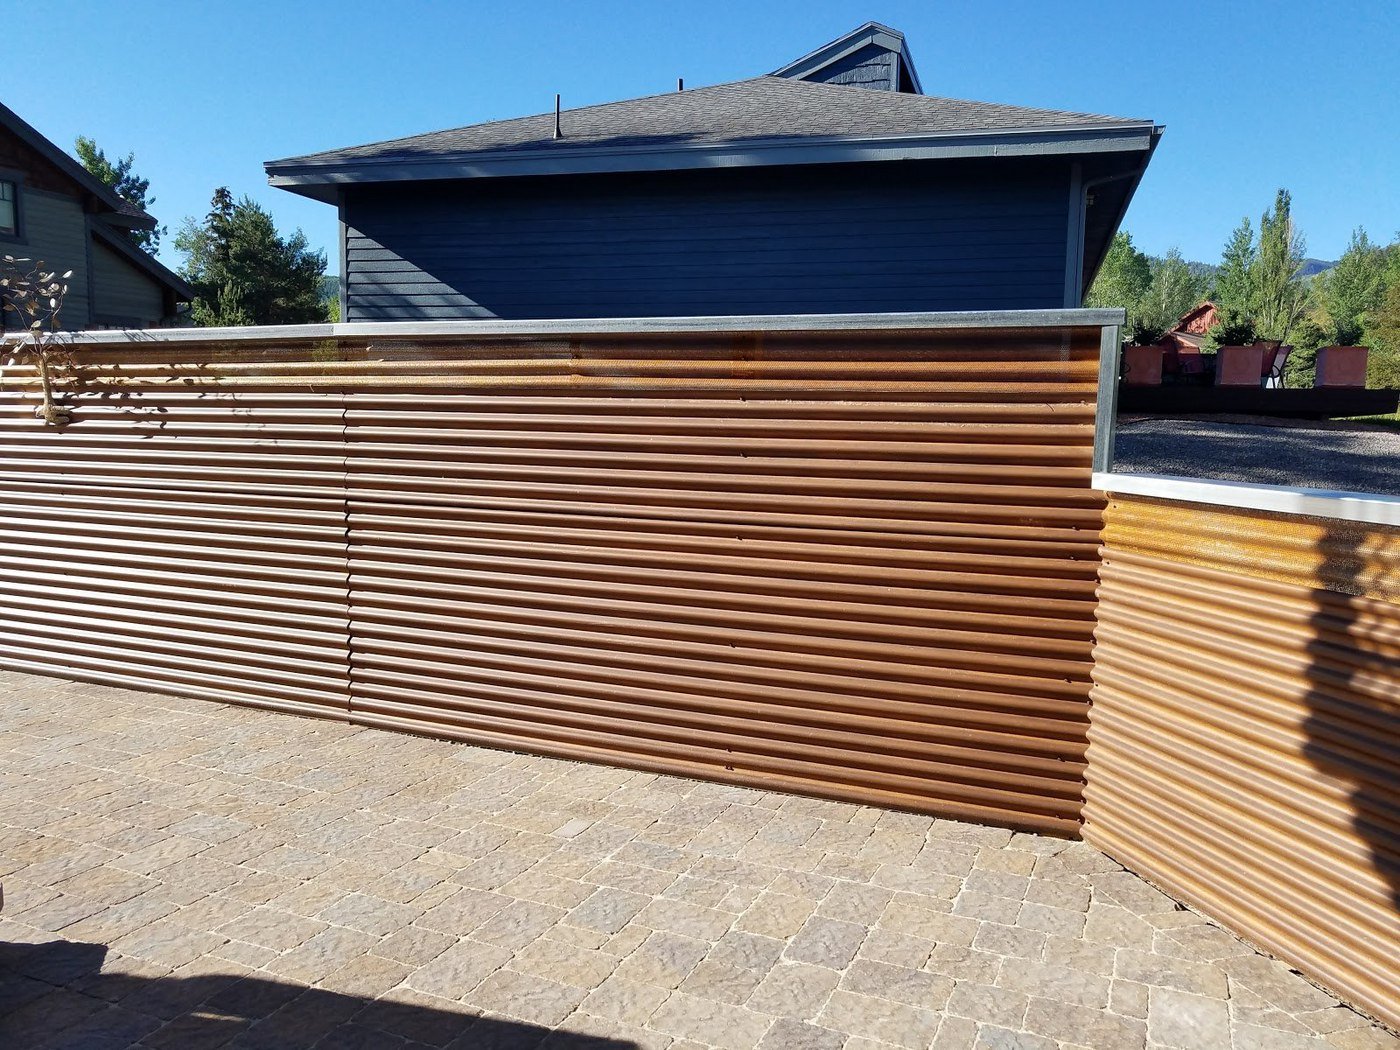 Corrugated Metal Fence 4 Benefits Of, Corrugated Metal Fence Panels Nanaimo